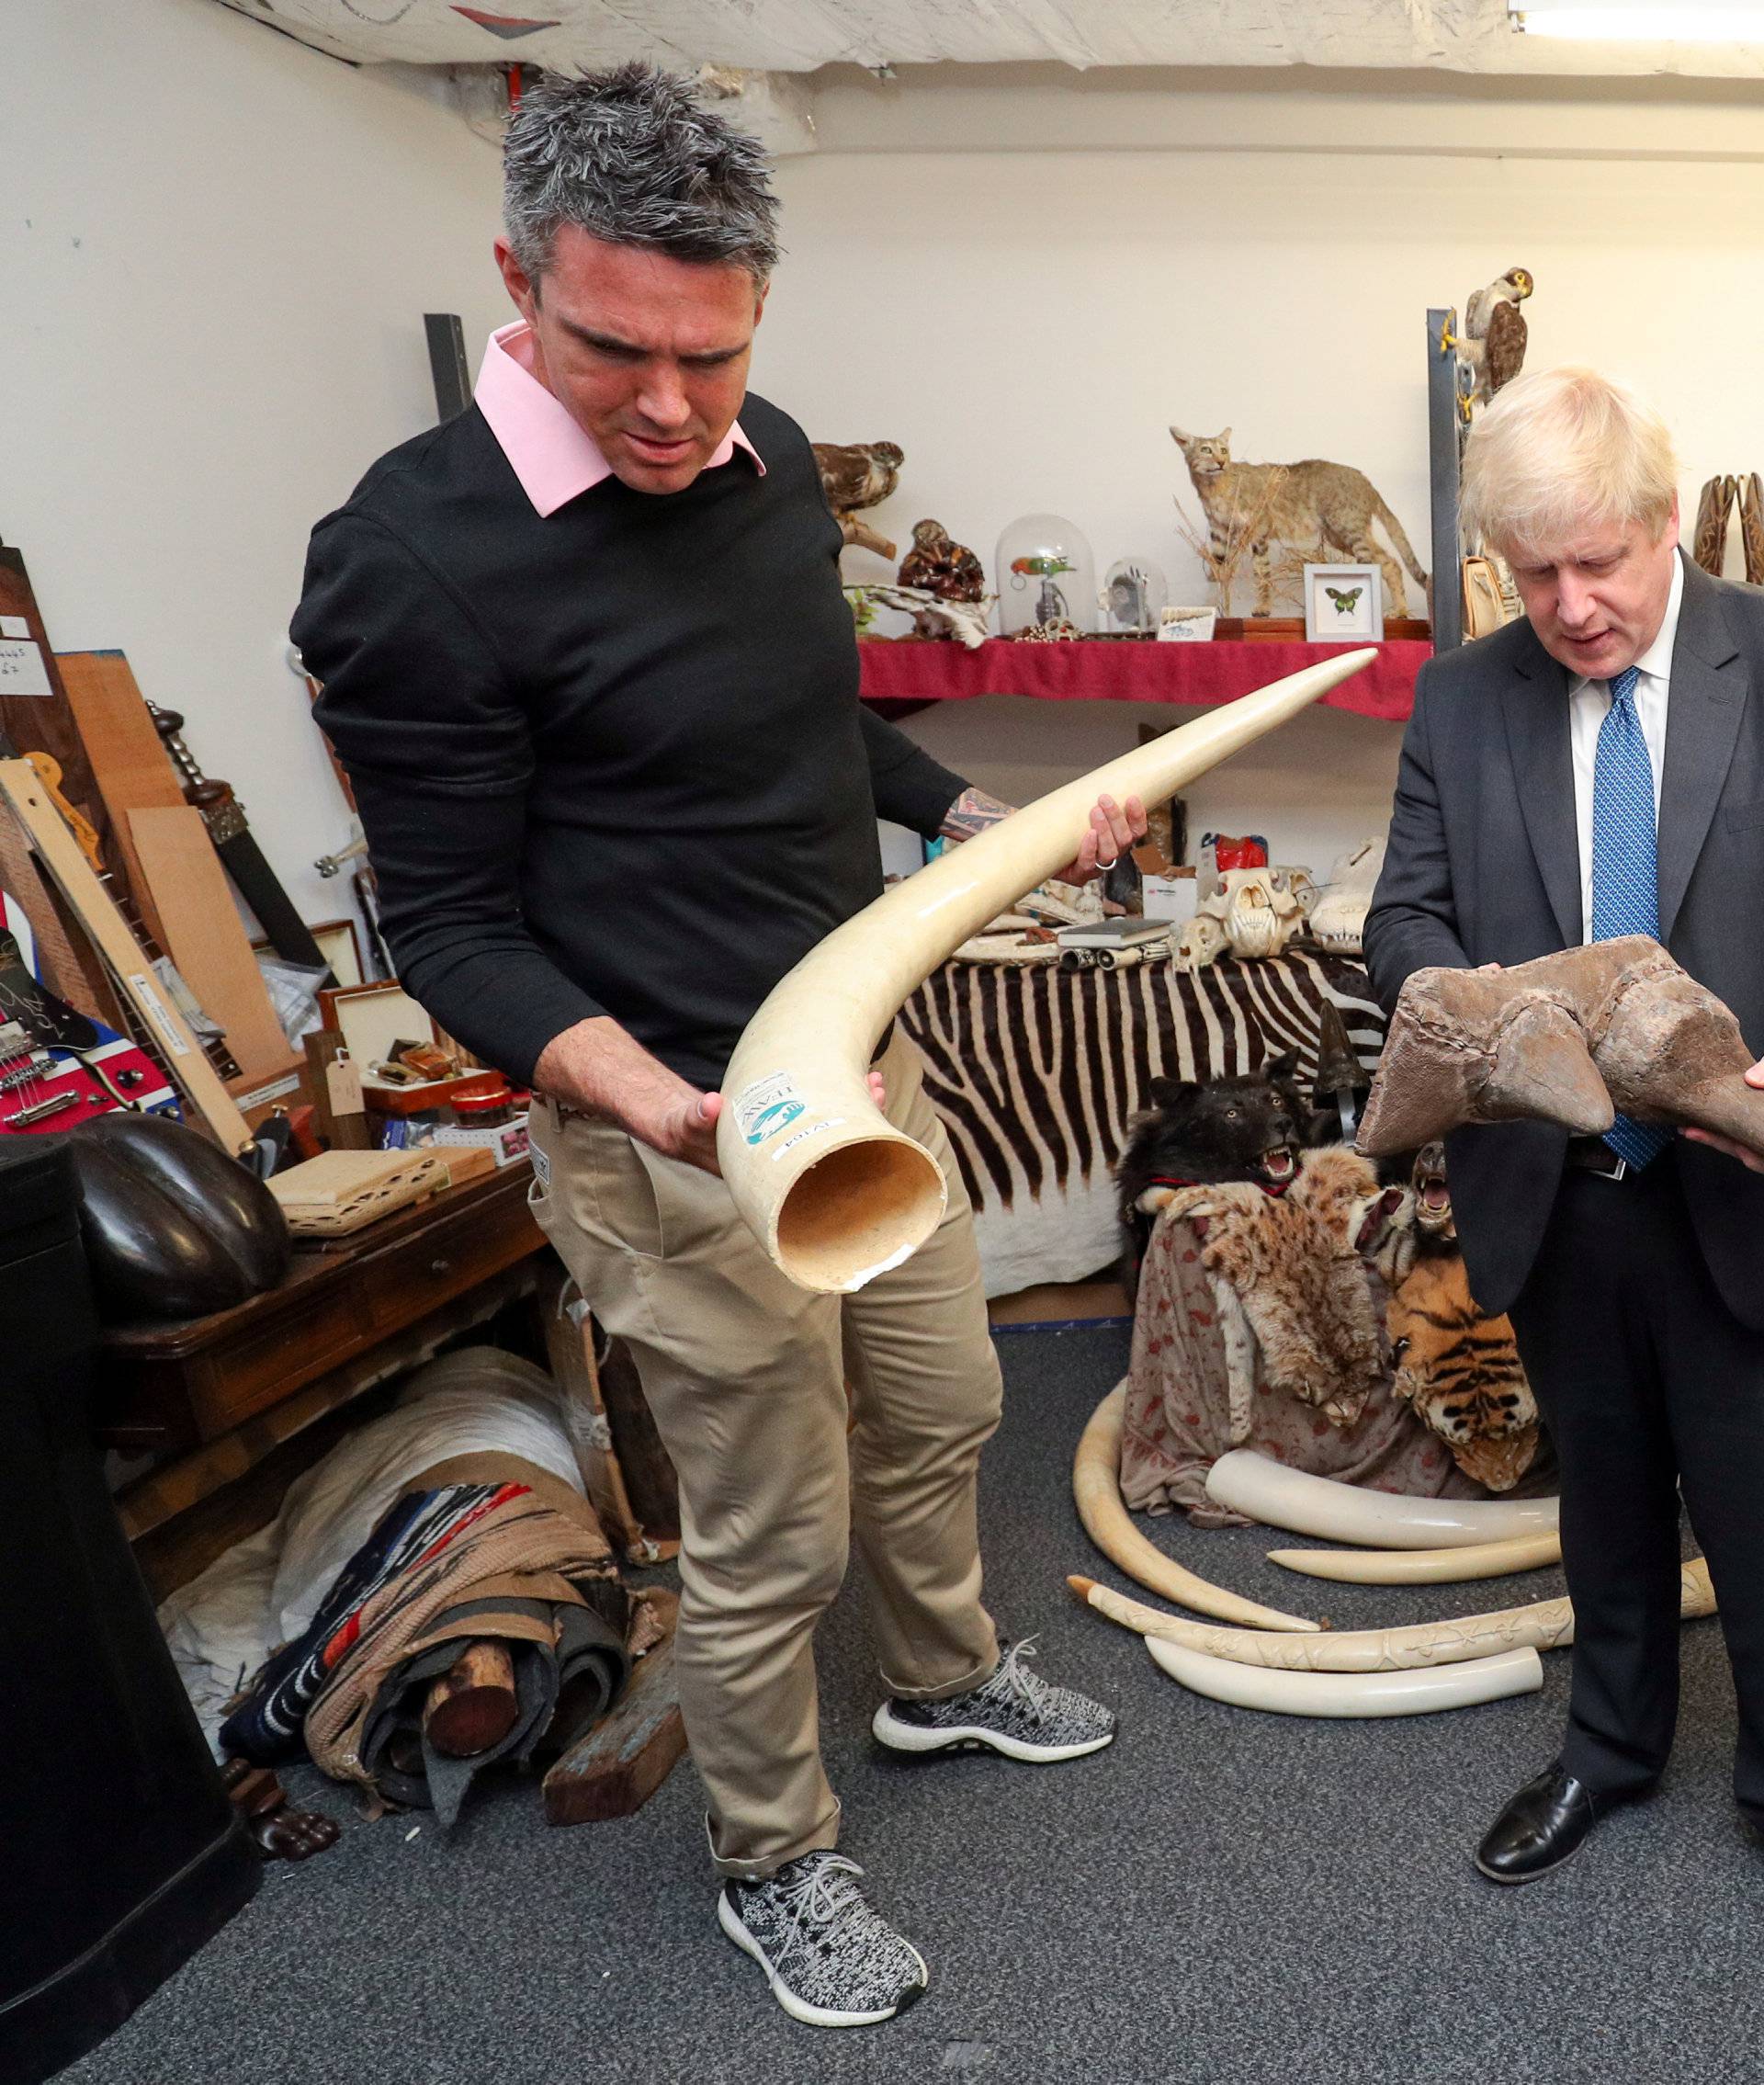 Former England cricketer Kevin Pietersen and Britain's Foreign Secretary Boris Johnson visit the ÃDead ShedÃ at Heathrow Airport, to observe items relating to the illegal wildlife trade, in west London